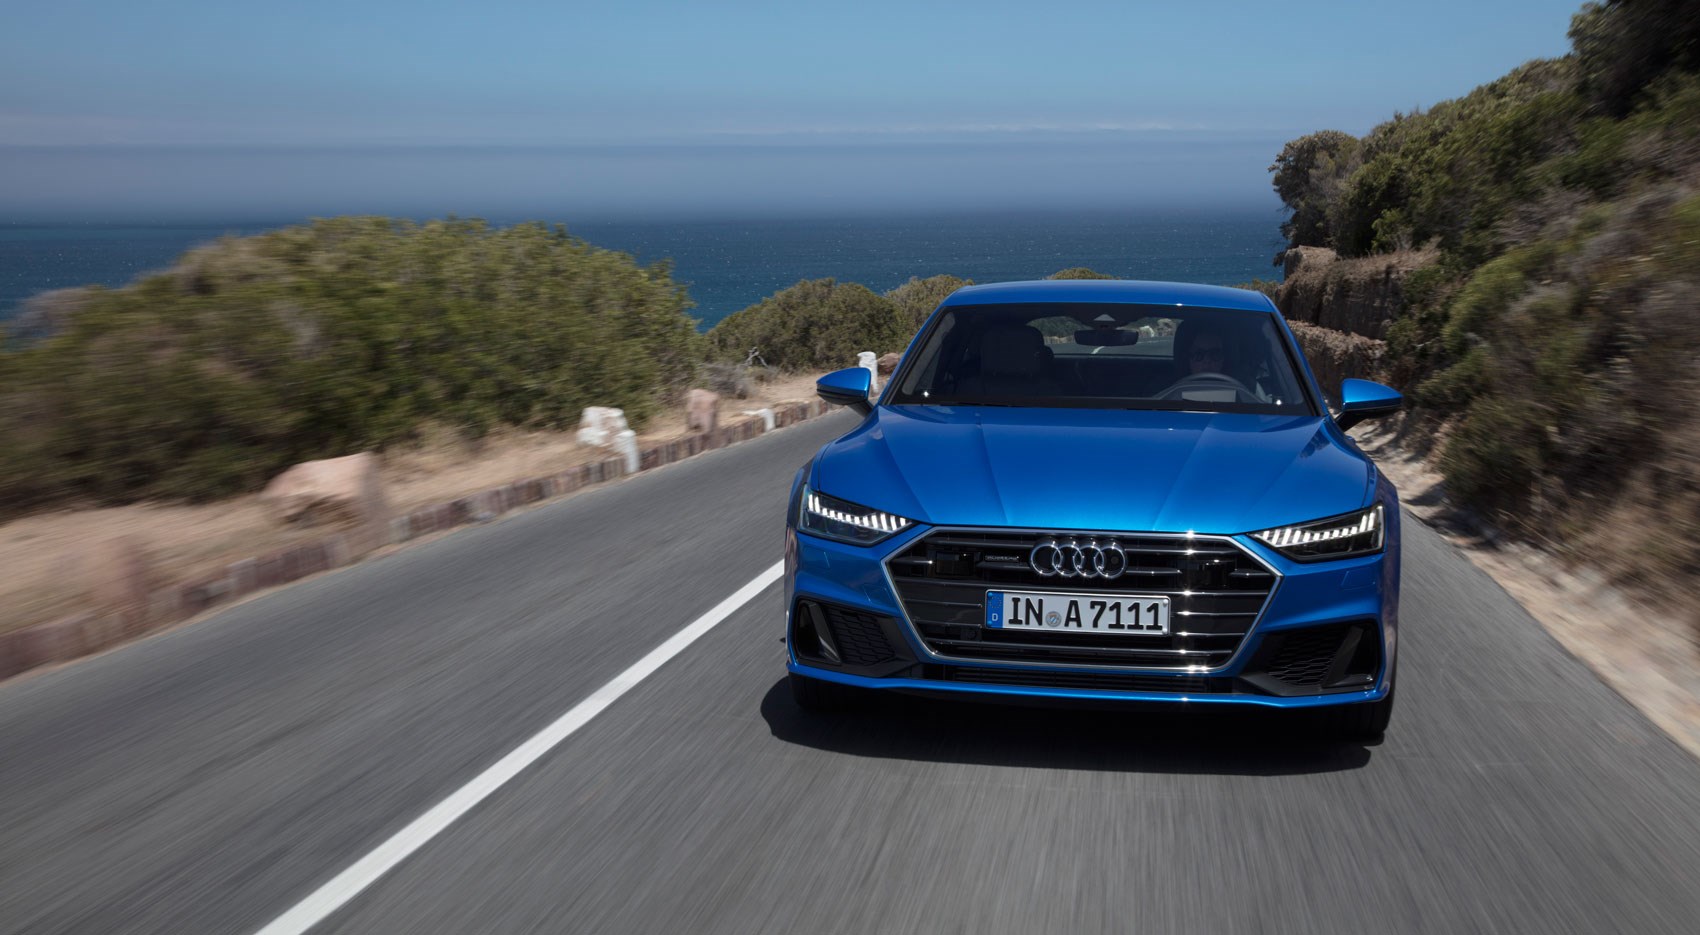 Test Drive: New 2014 Audi A7 sleek, sophisticated